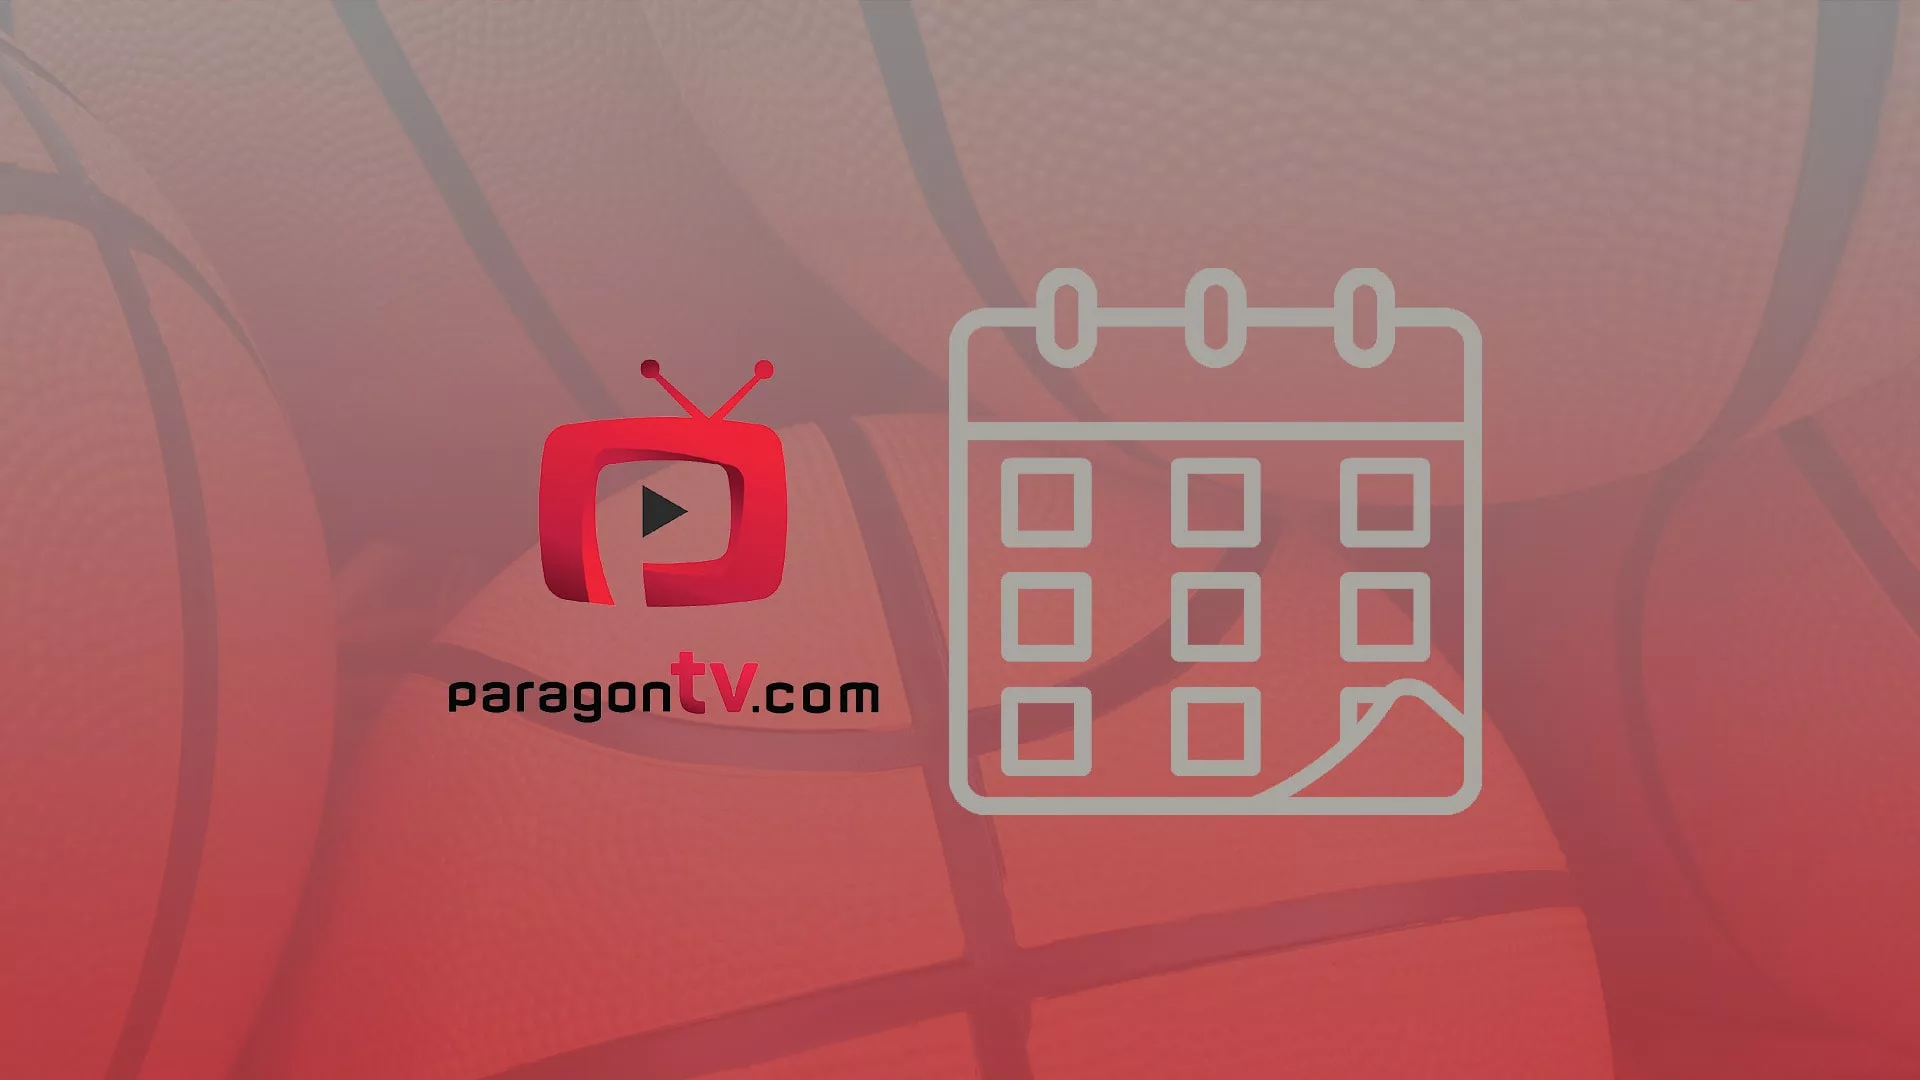 Basketballs on Screen with Paragontv.com Logo and Schedule/Calendar Clip Art